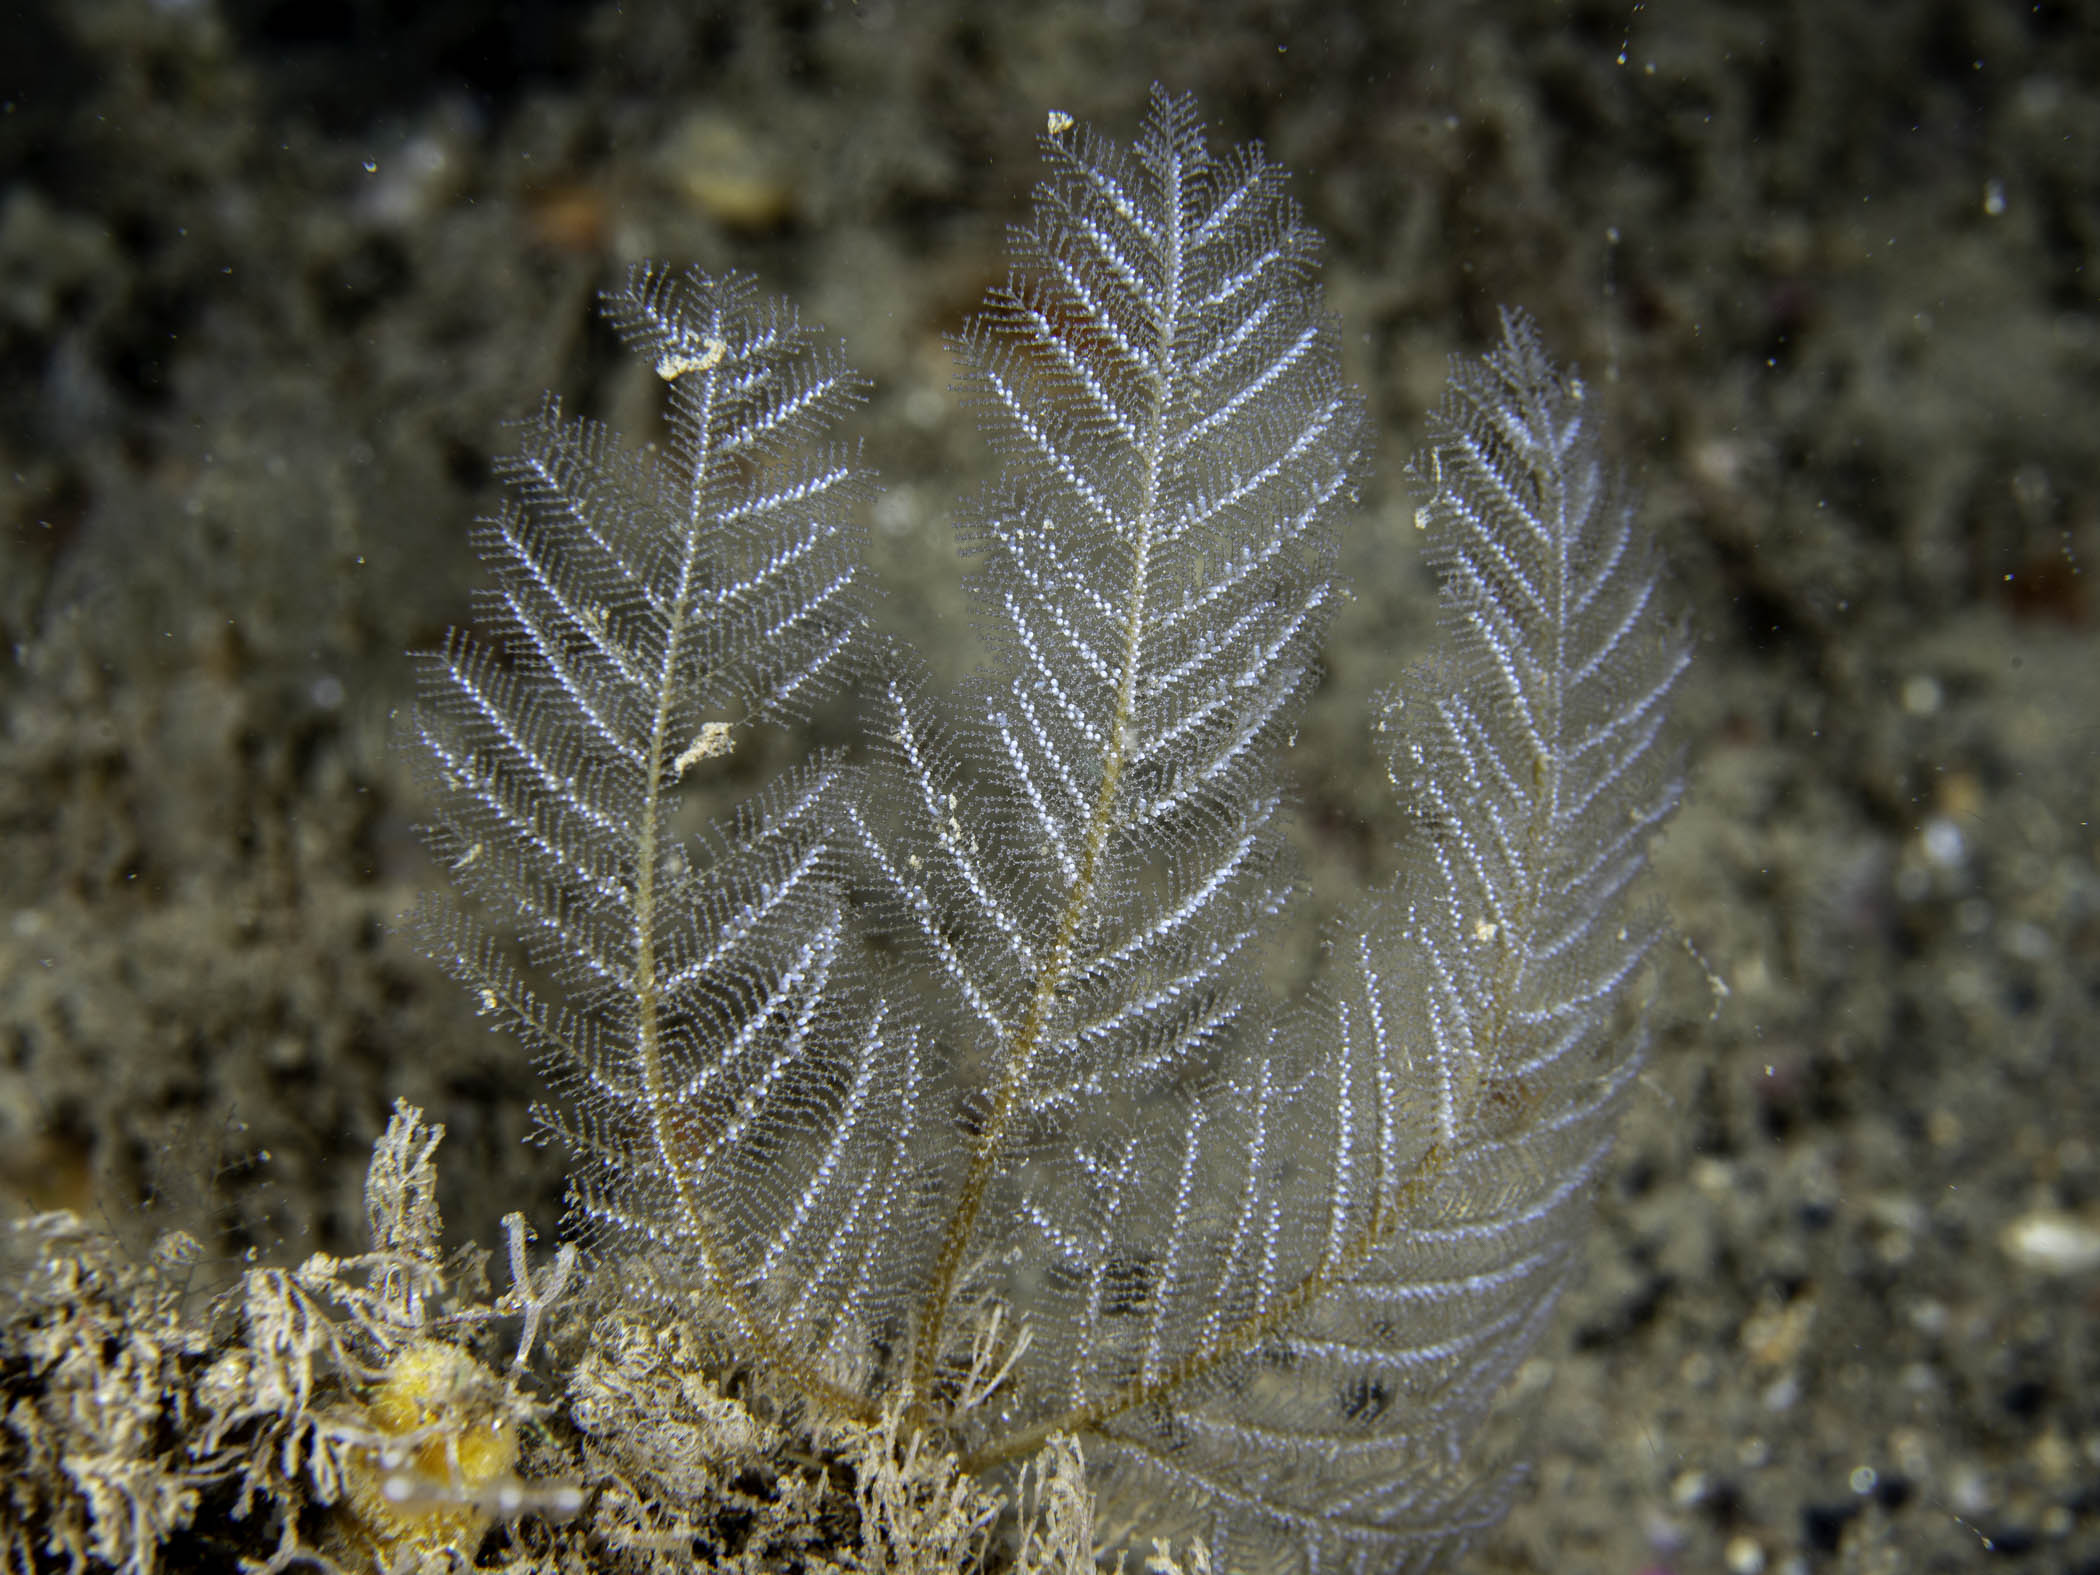 image: Polyplumaria flabellata. Reproductive colony, Rathlin Island, 2019.